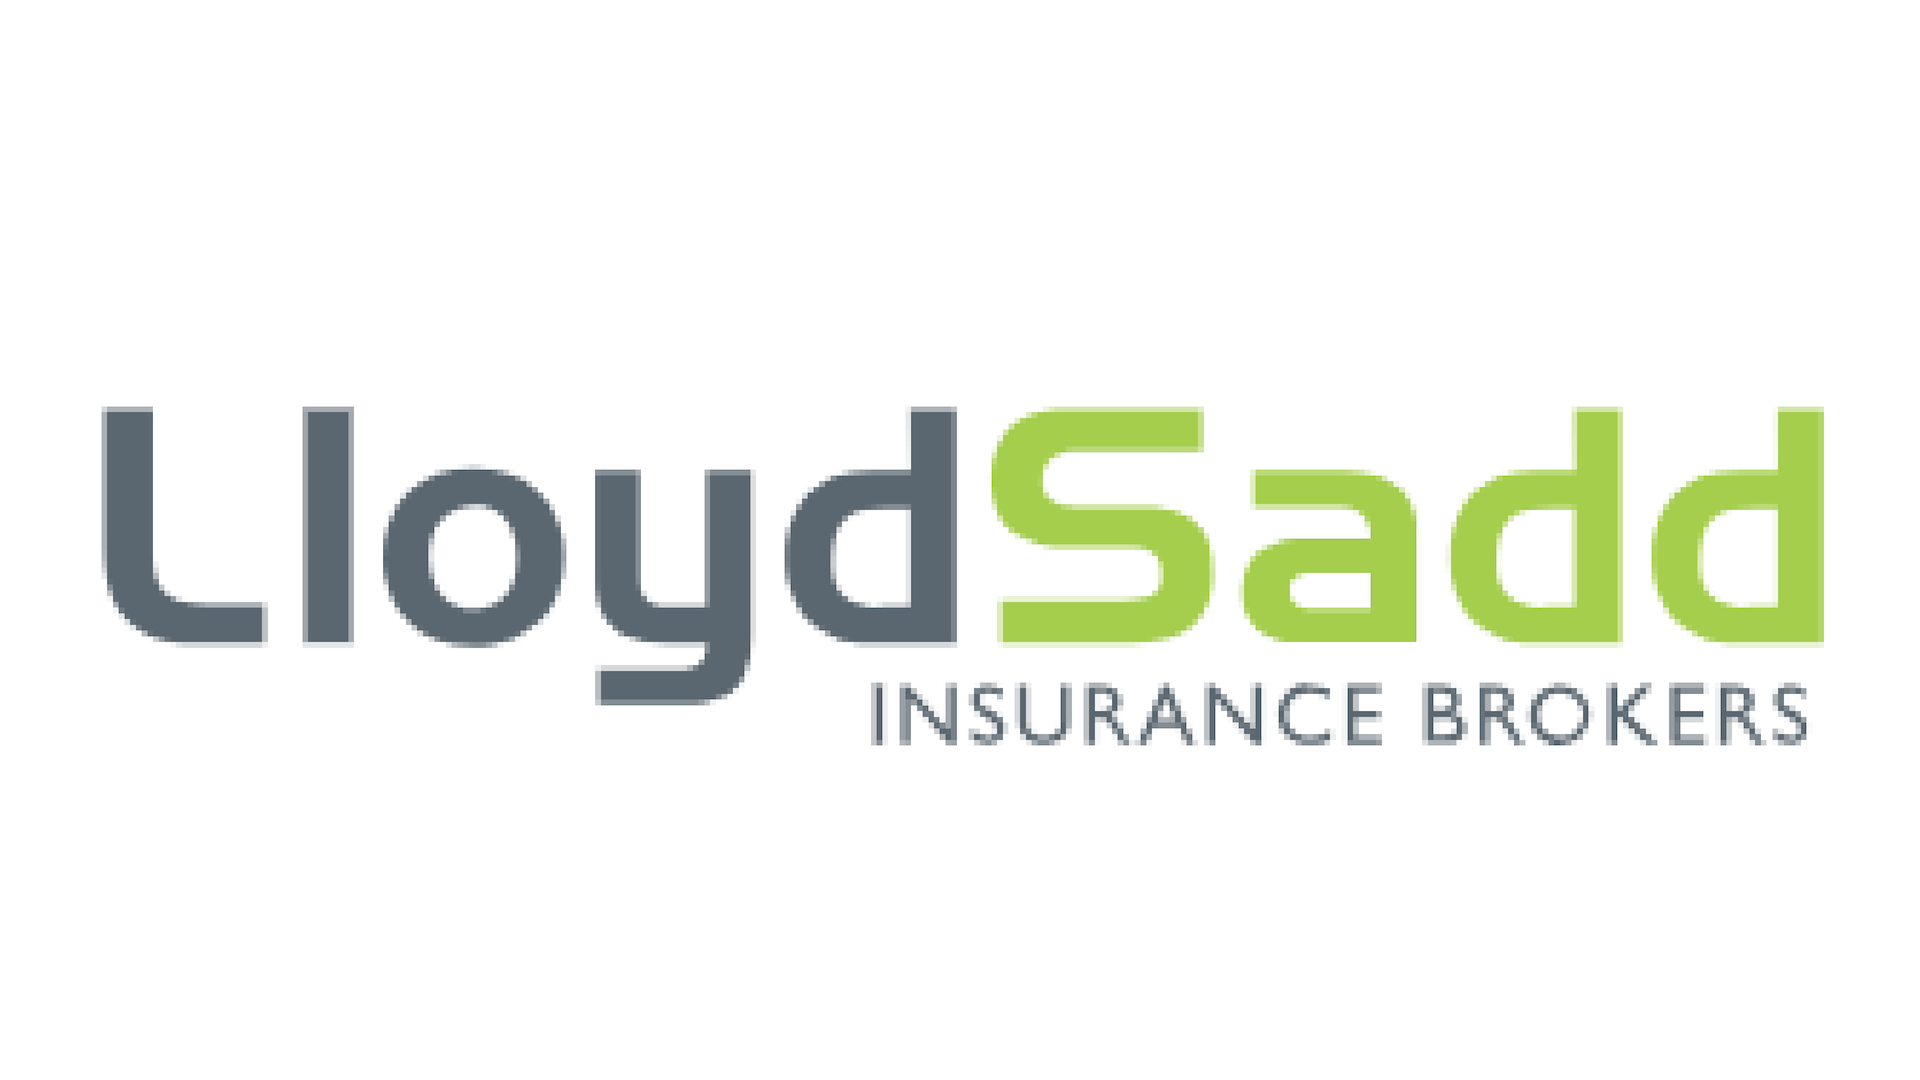 Lloyd Sadd Insurance Brokers